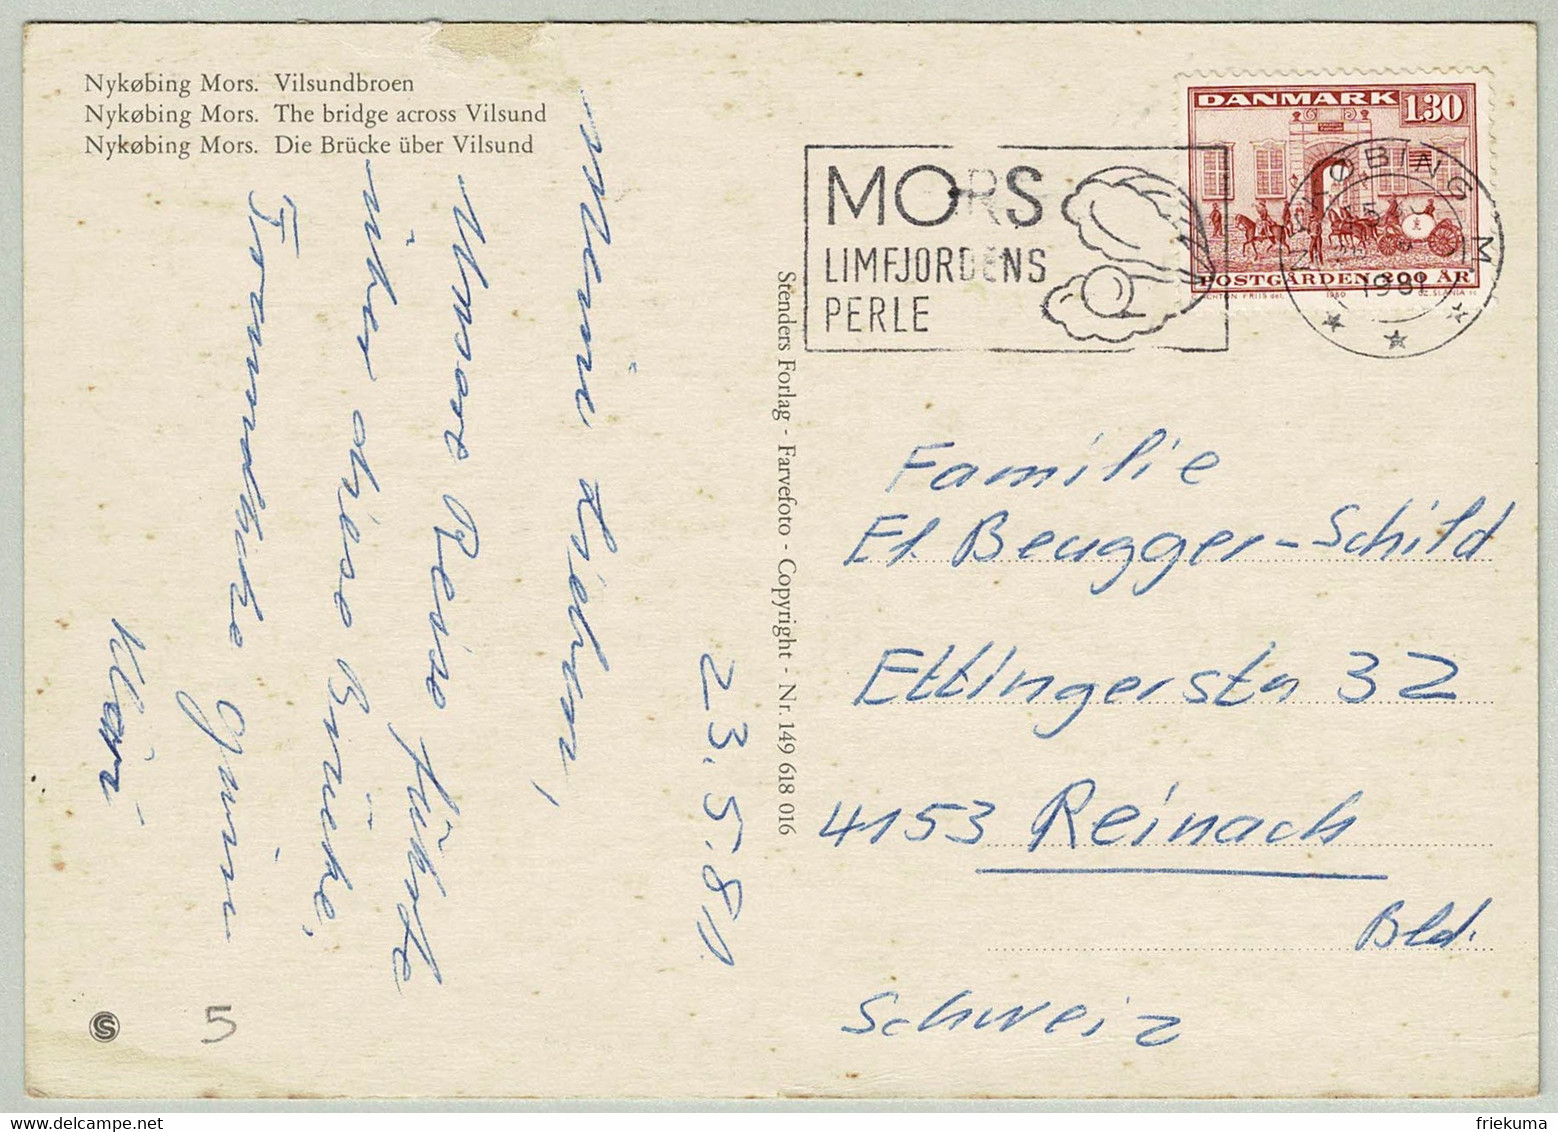 Dänemark / Danmark 1981, Postkarte Nykobing Mors - Reinach (Schweiz), Insel / Ile / Island, Perle / Pearl - Islas